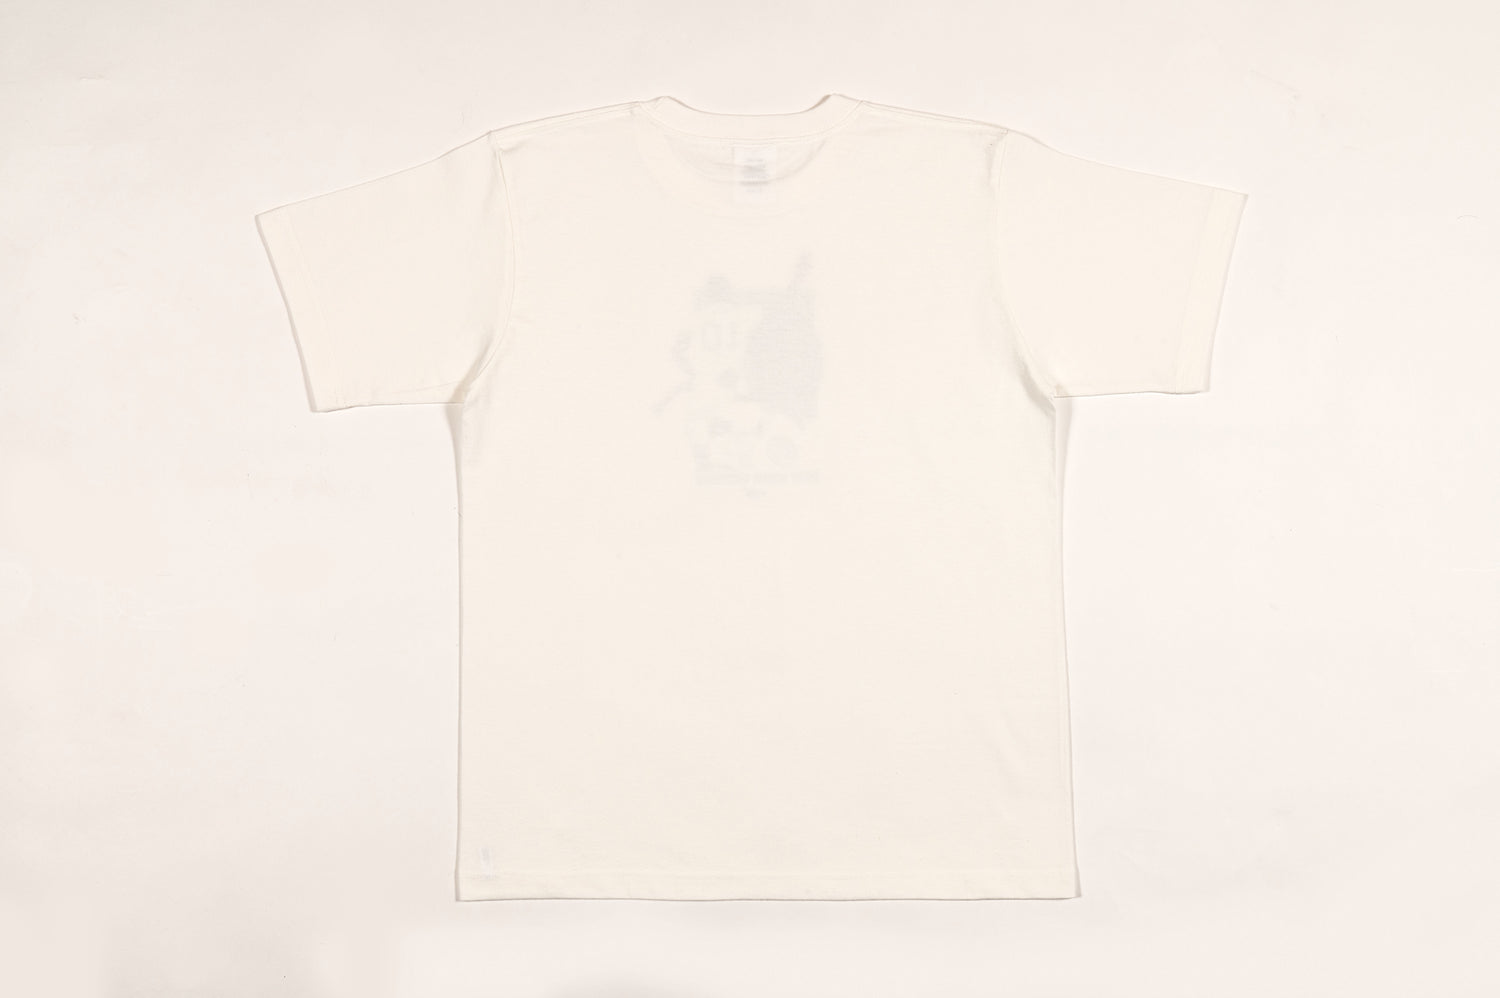 VSS Studio x New York Cosmos Pelé Portrait T-Shirt